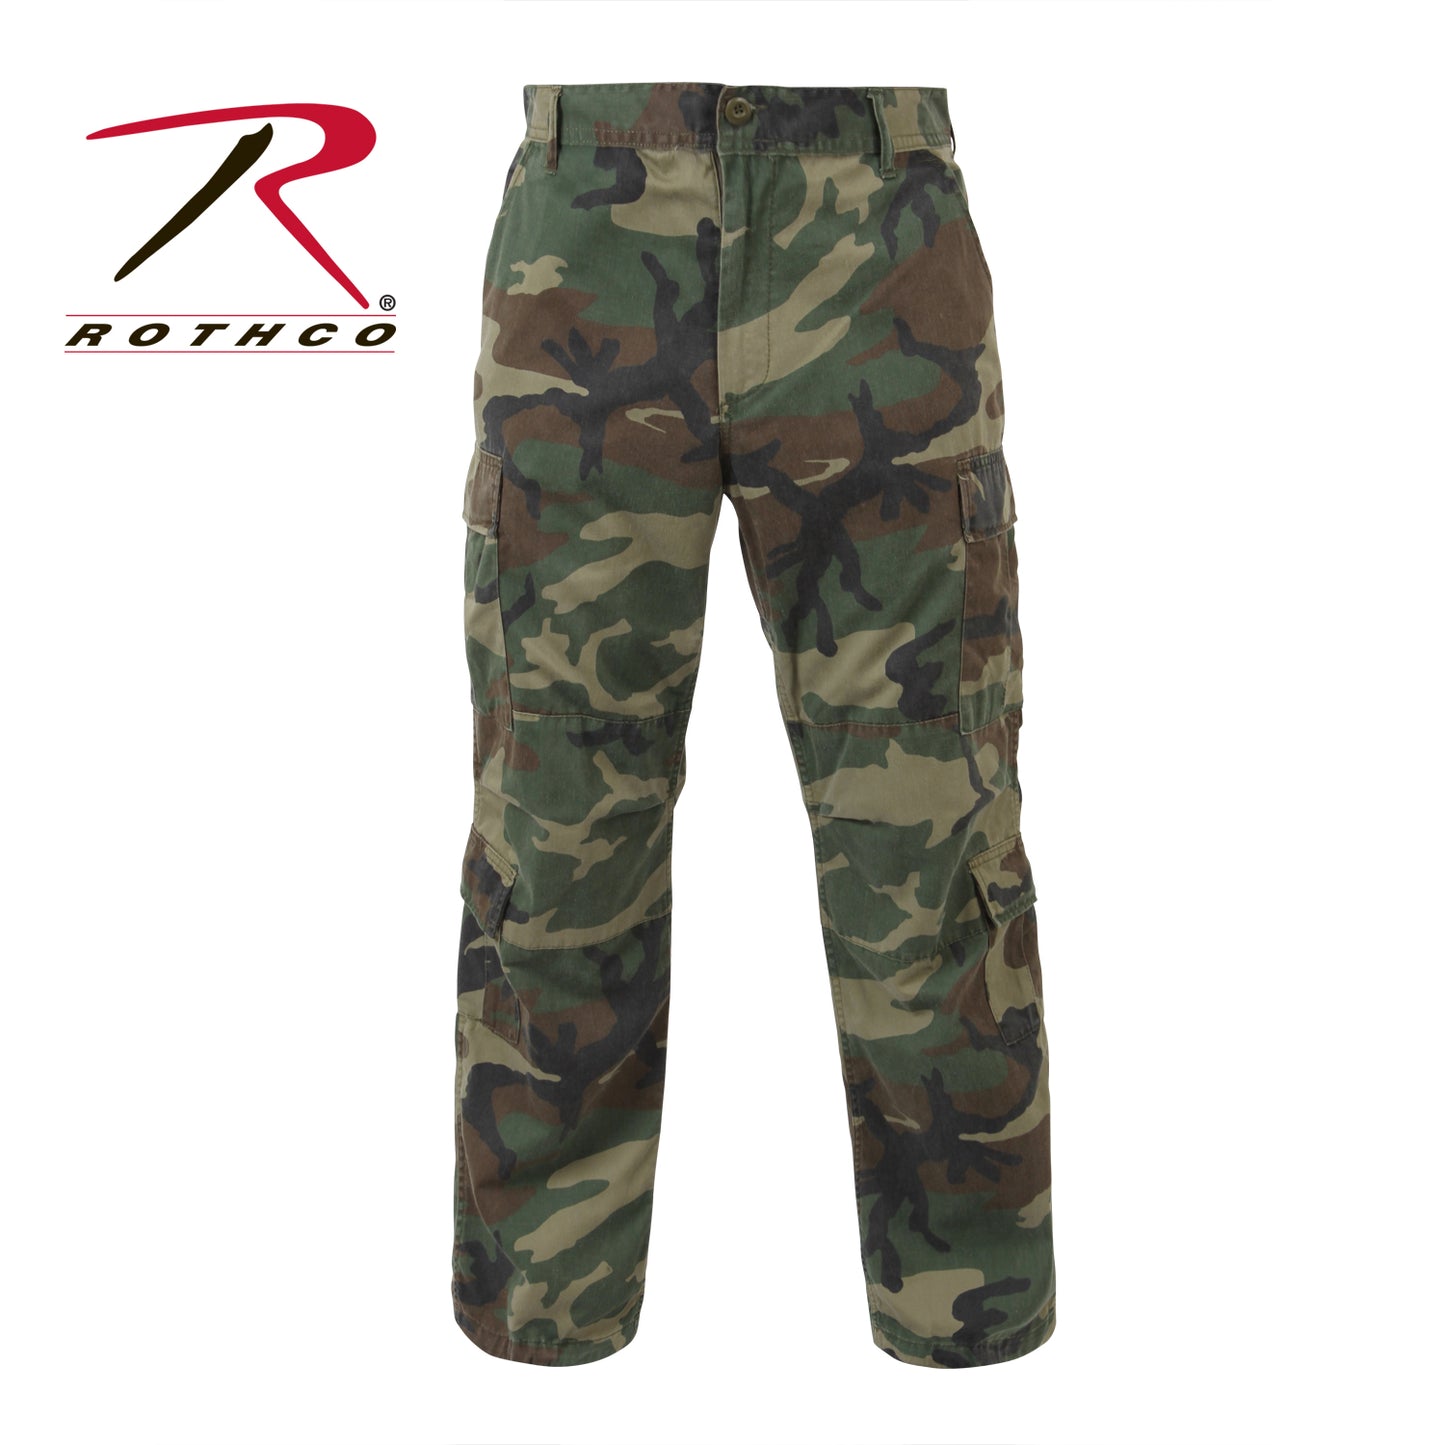 Camo Paratrooper Fatigue Pants, Vintage Style